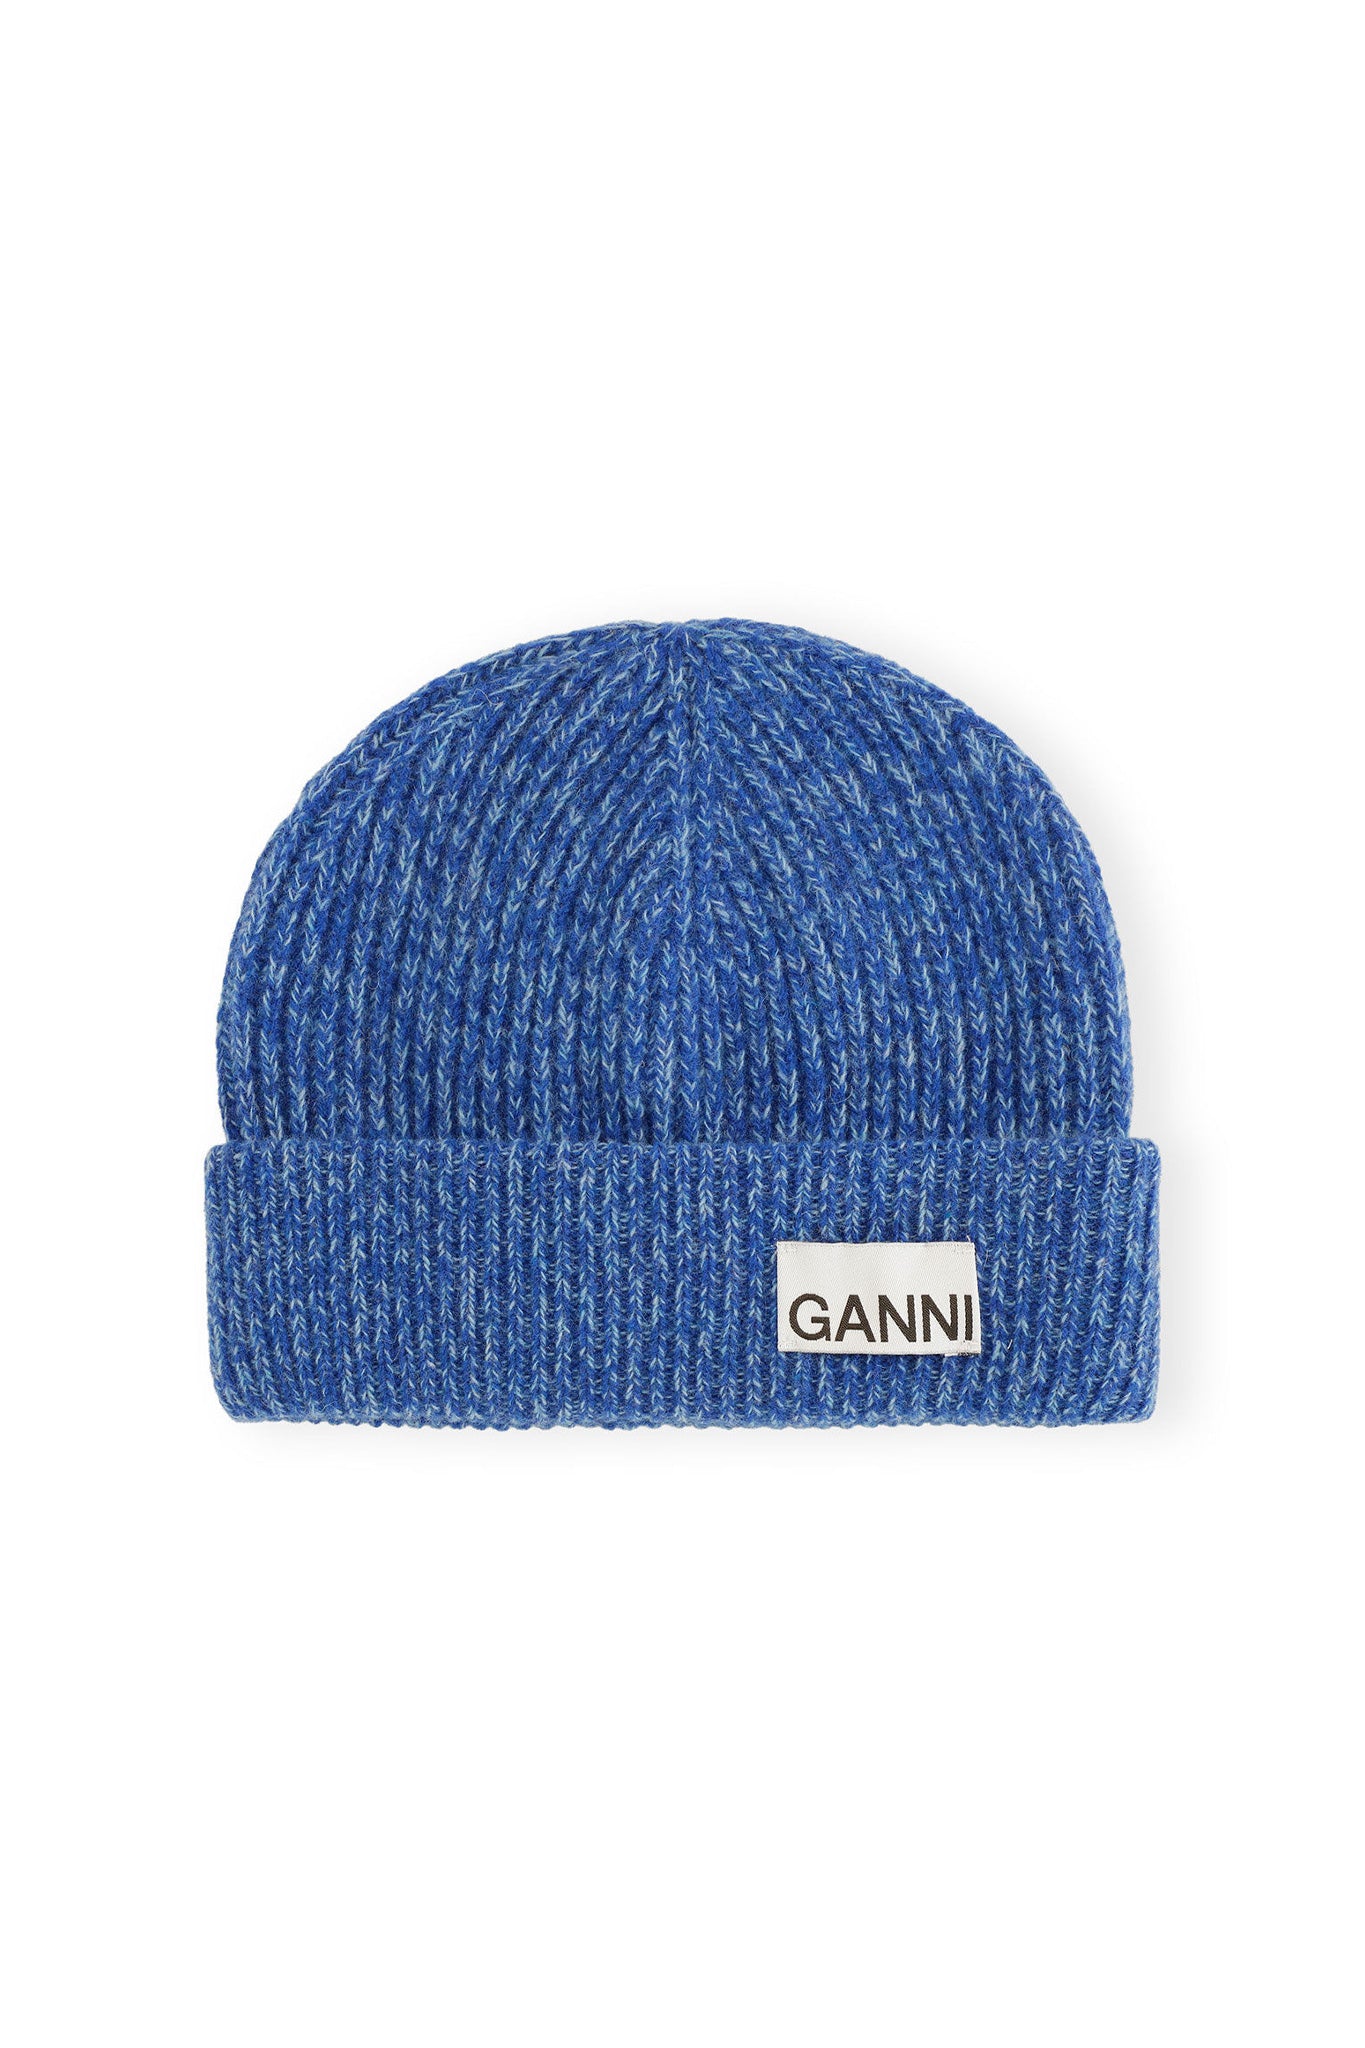 Ganni-Blue-Fitted-Wool-Rib-Knit-Beanie-Nautical-Blue